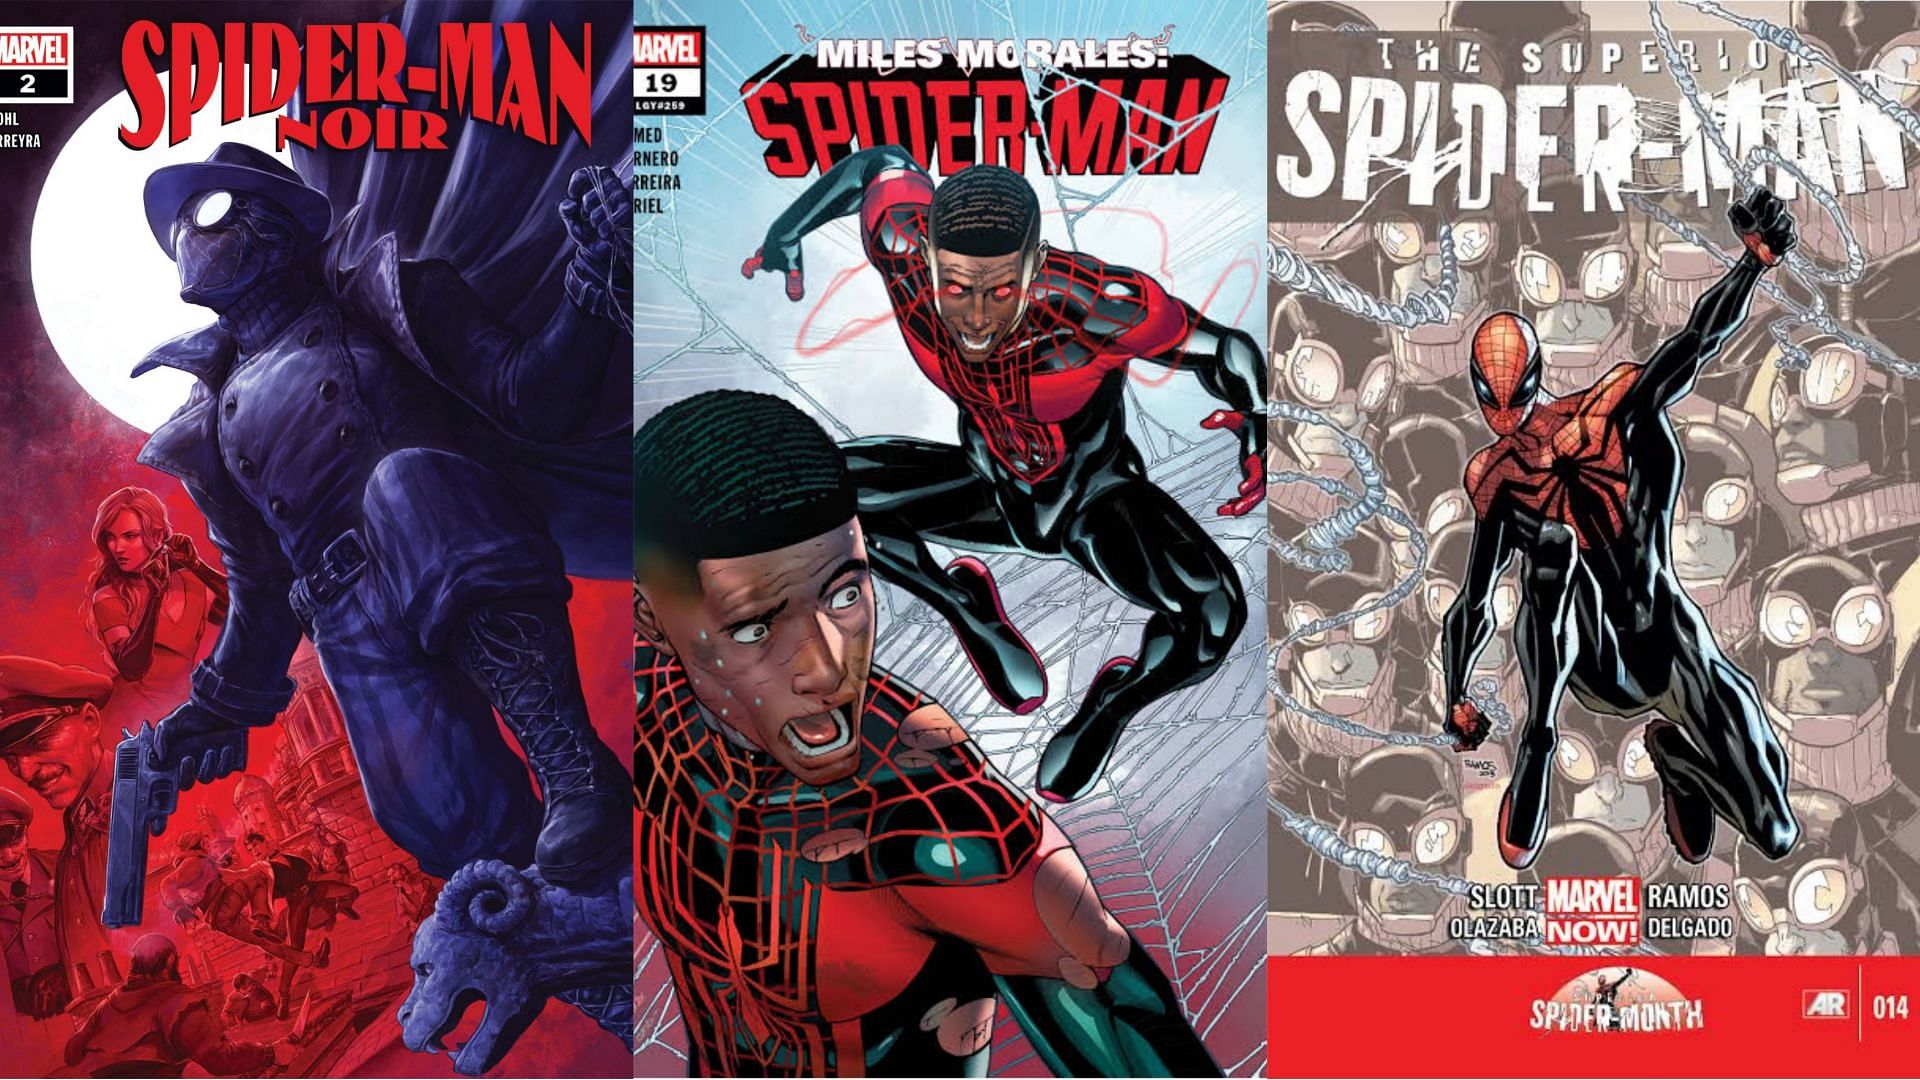 Spider-Man Noir, Miles Morales and Superior Spider-Man (Image via Marvel Comics)